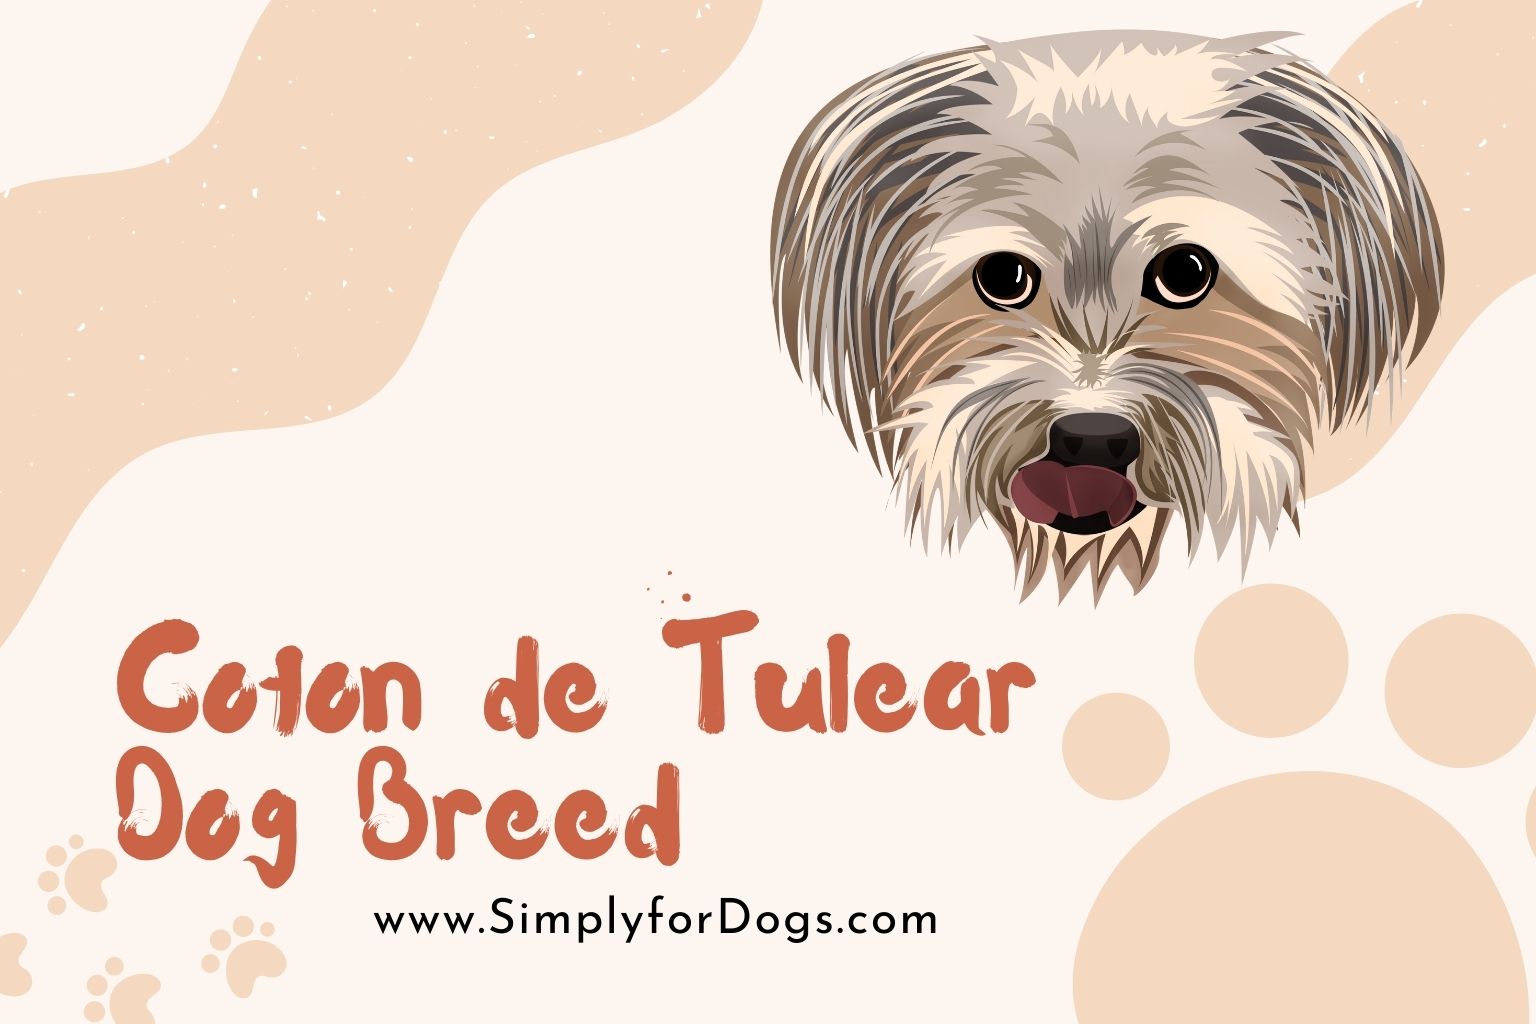 Coton de Tulear Dog Breed